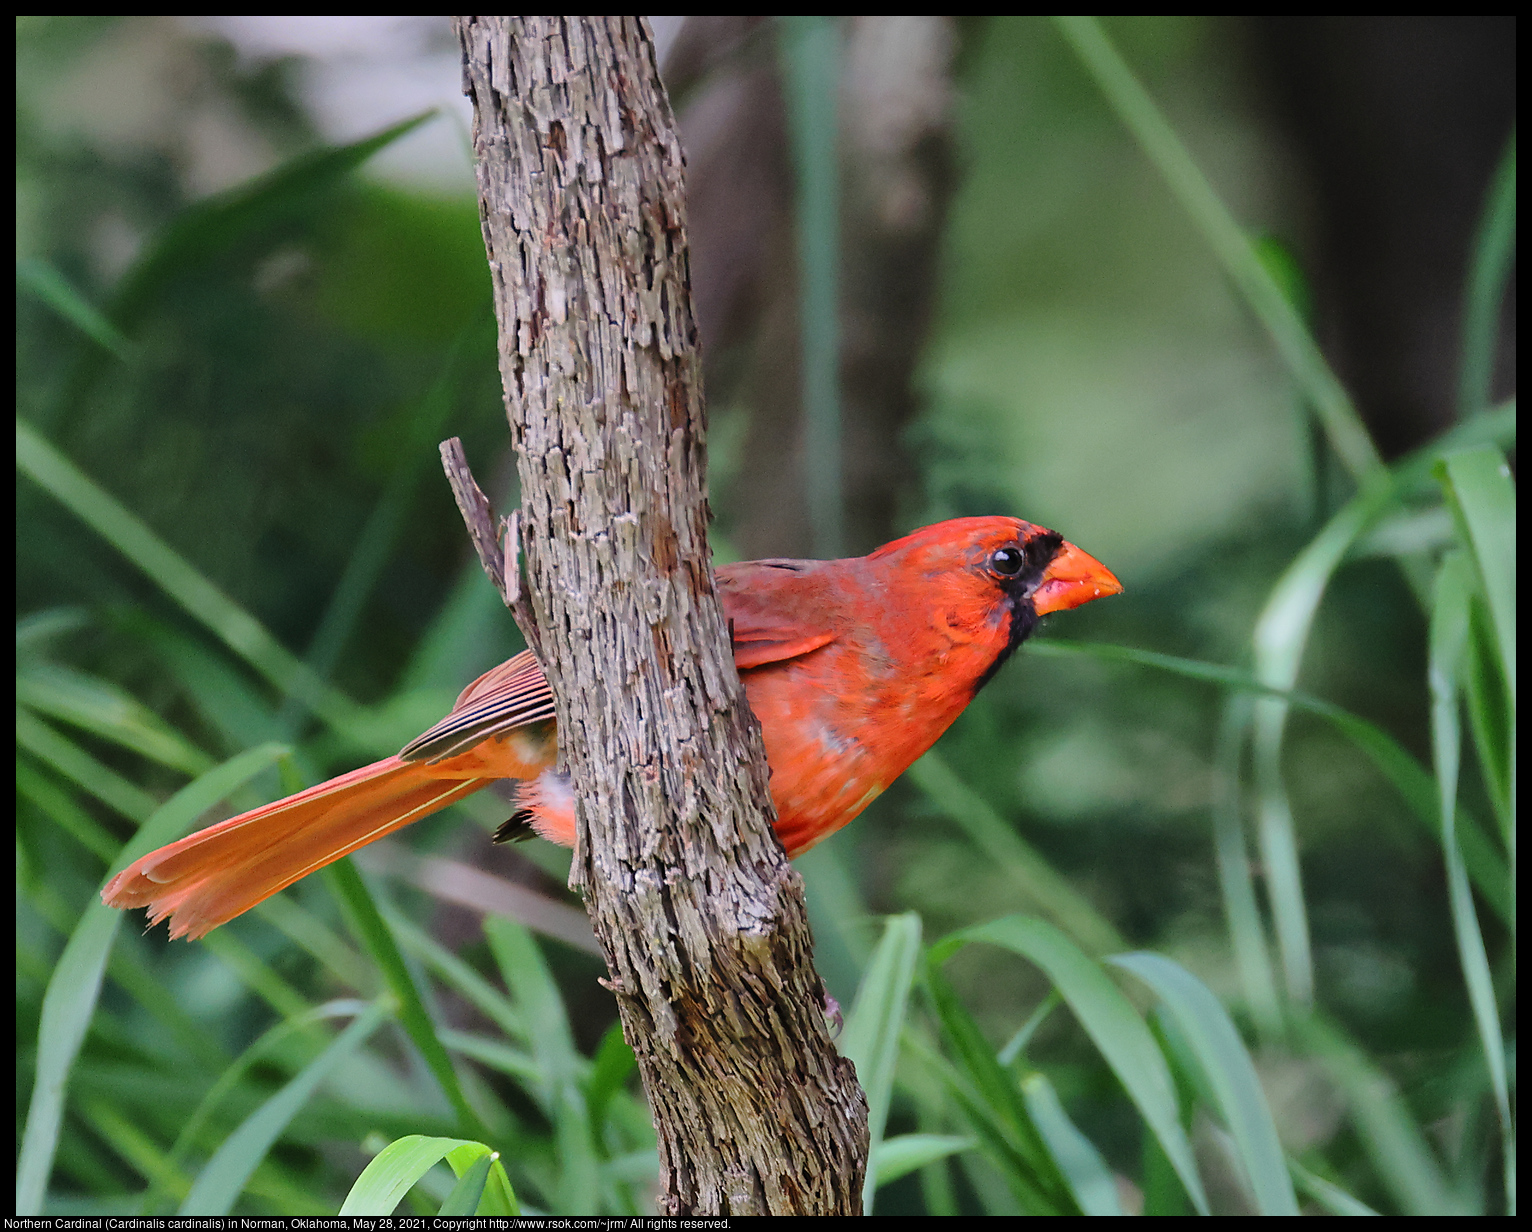 Northern Cardinal (Cardinalis cardinalis) in Norman, Oklahoma, May 28, 2021